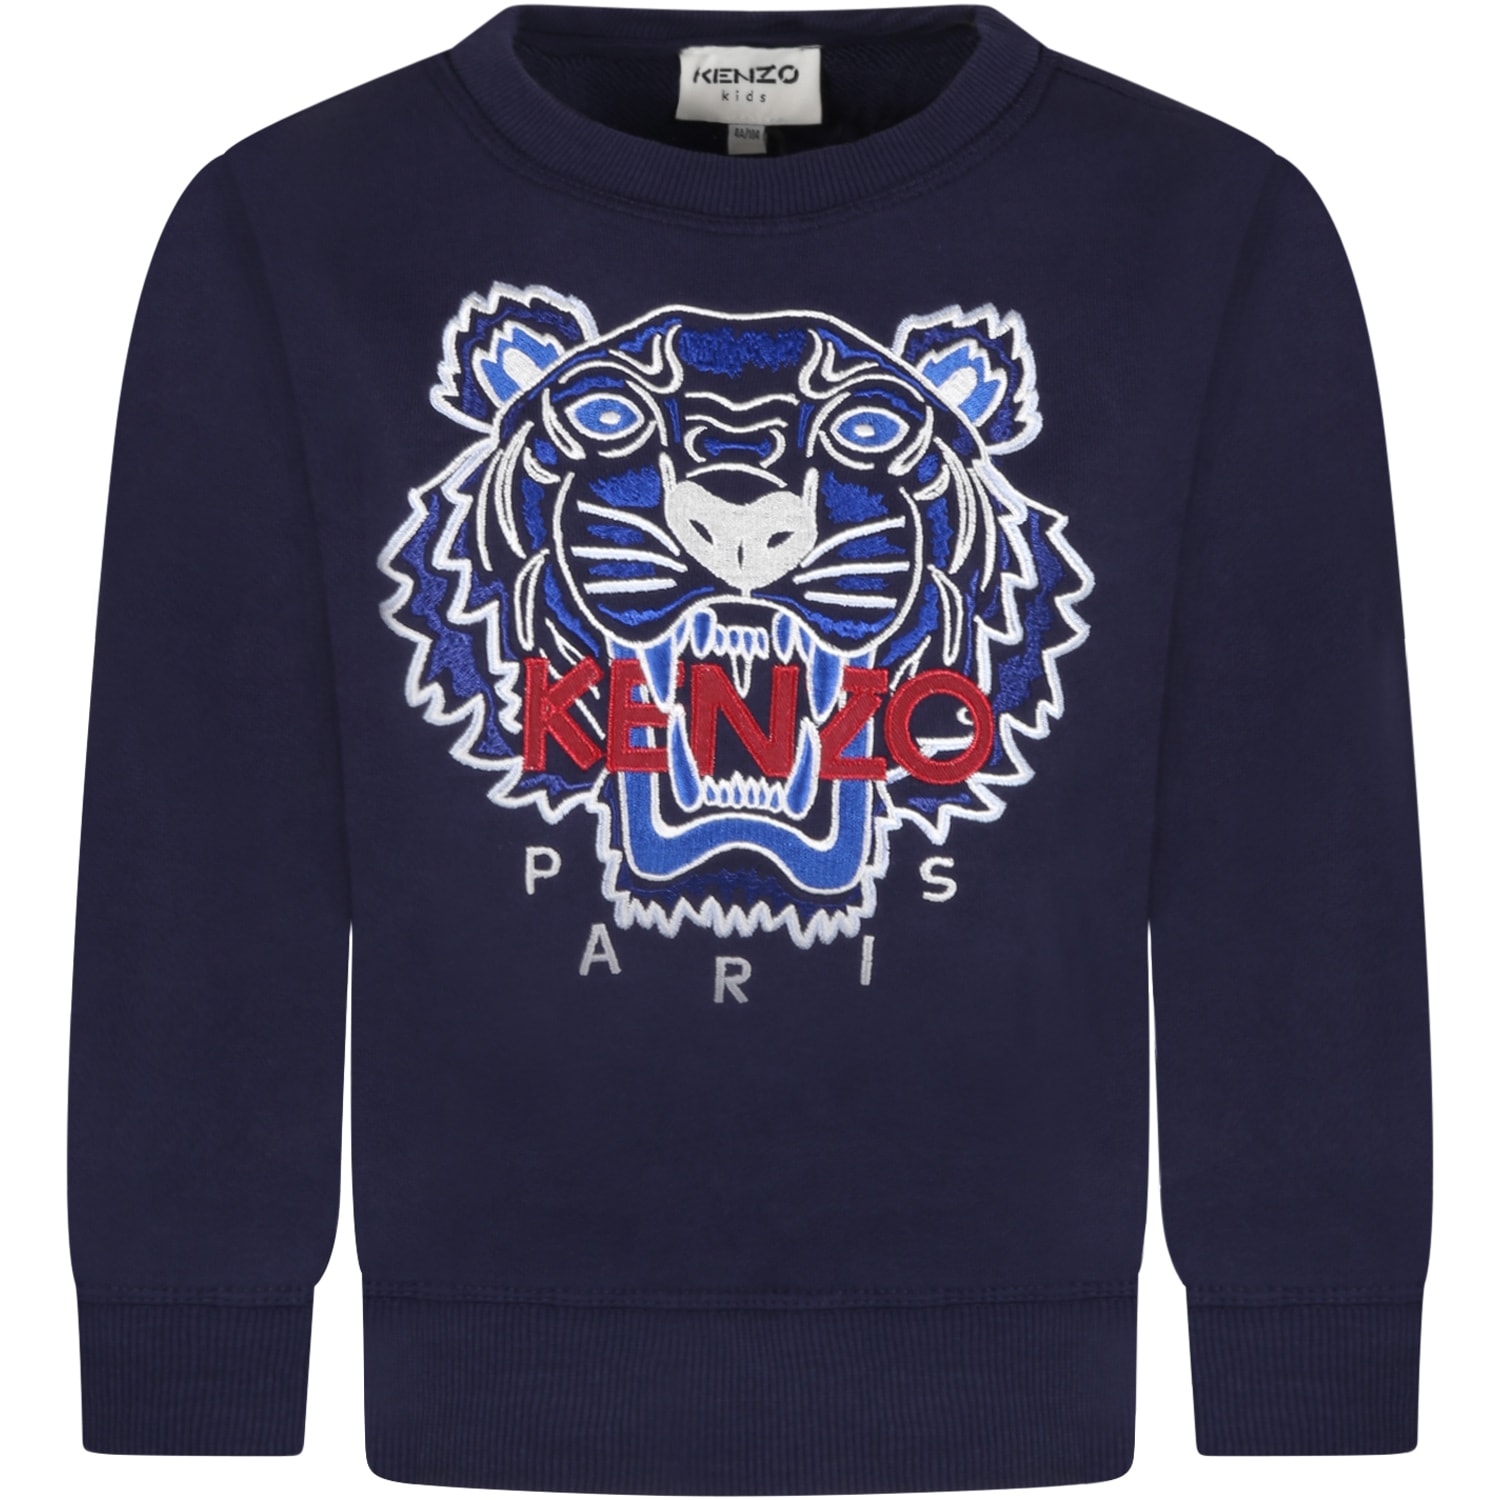 Kenzo Kids blue sweatshirt for boy with iconic tiger